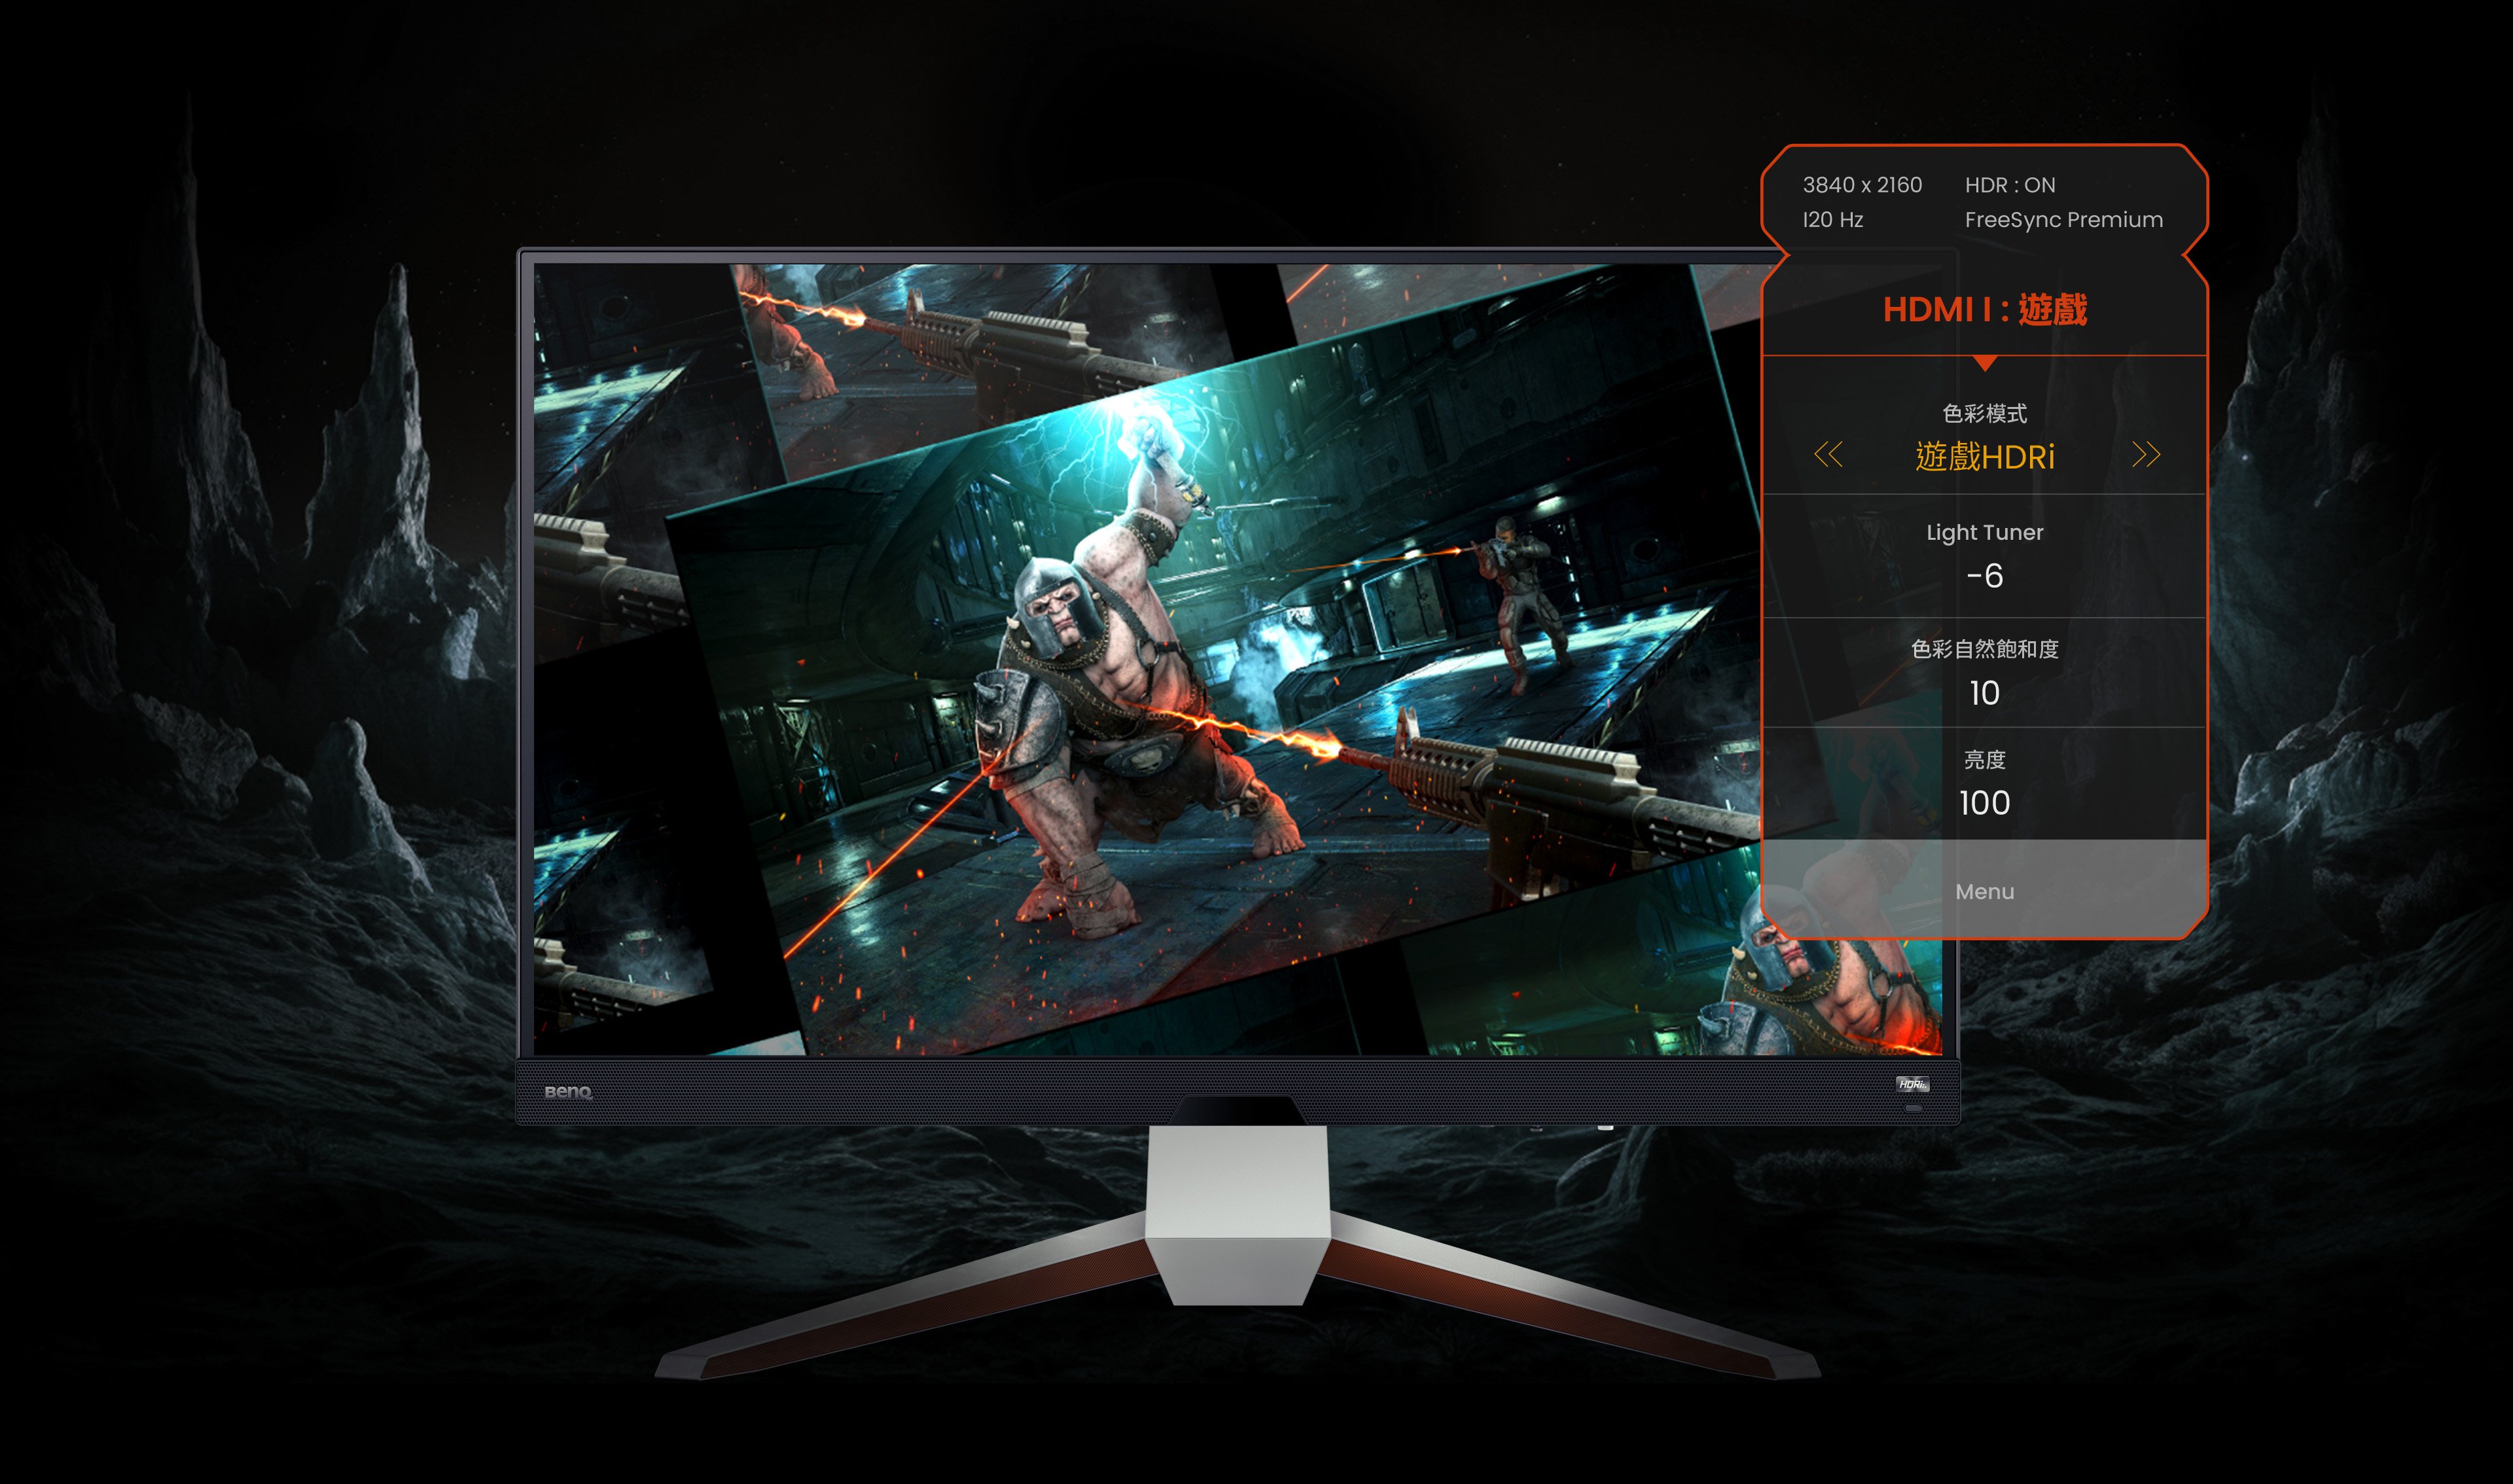 MOBIUZ Gaming Monitor: Newly Optimized BenQ HDRi